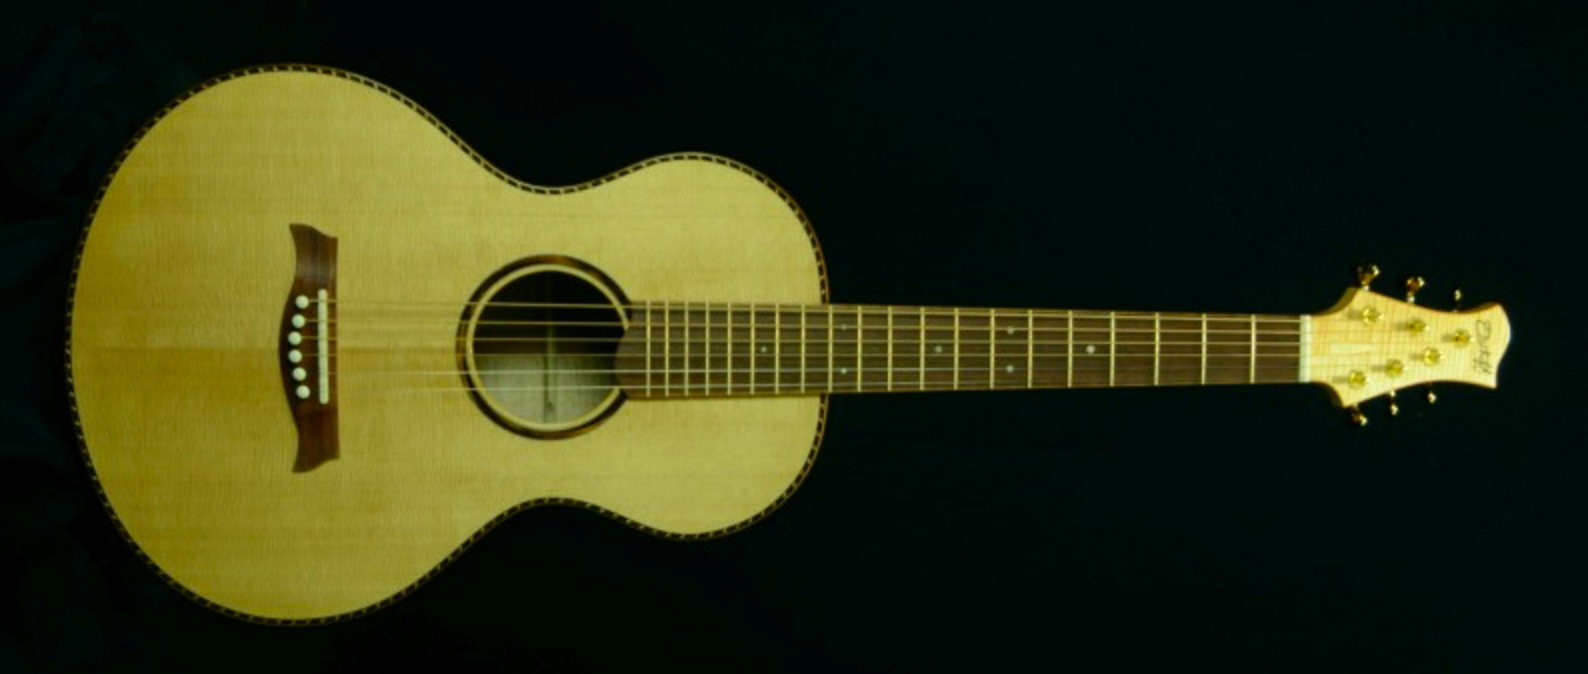 Osthoff Parlor guitar